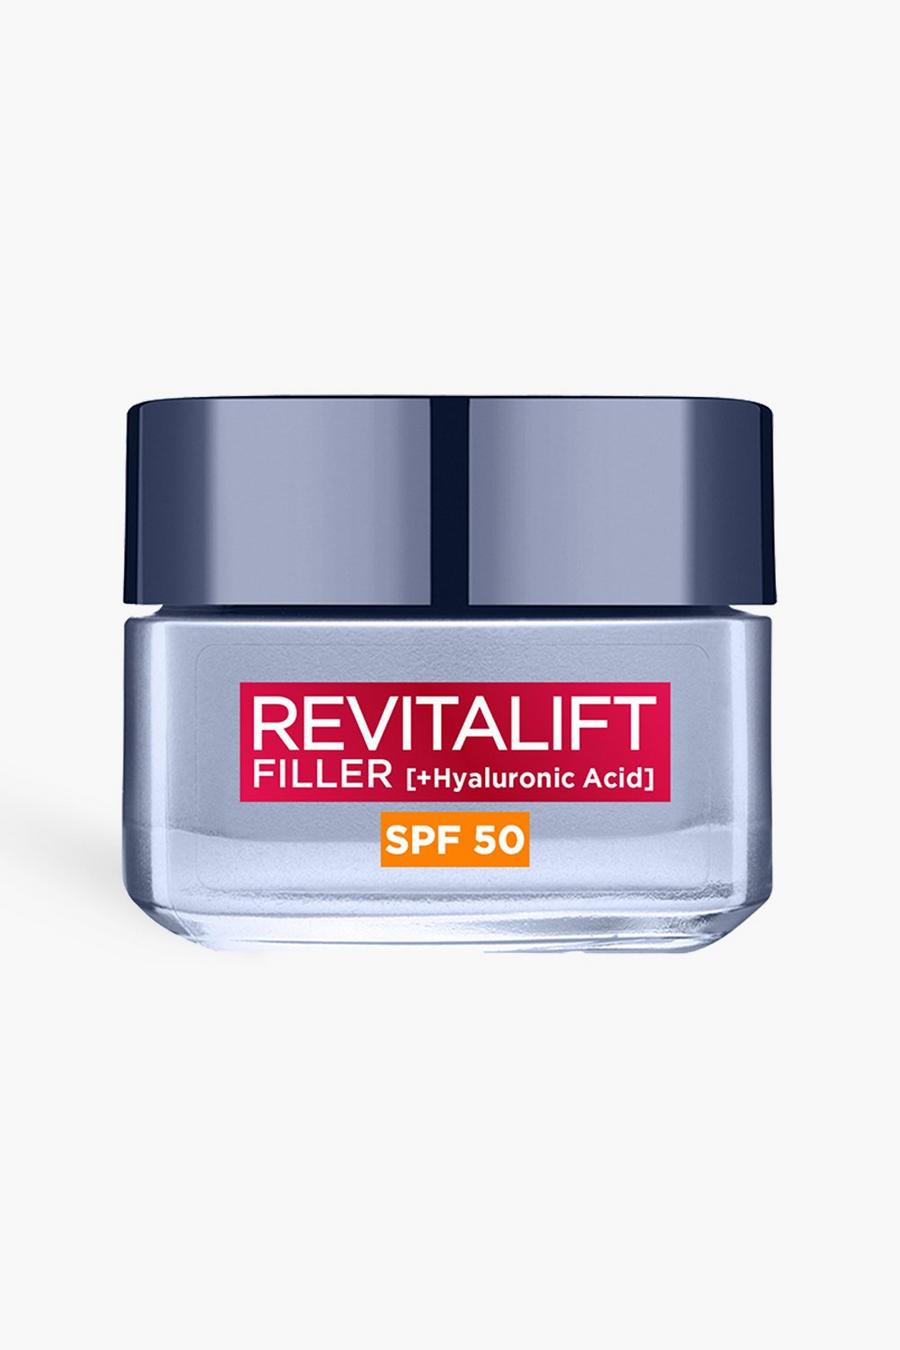 Purple L'Oréal Paris Revitalift Filler Replumping Anti-Ageing Hyaluronic Acid Cream With SPF 50, 50ml